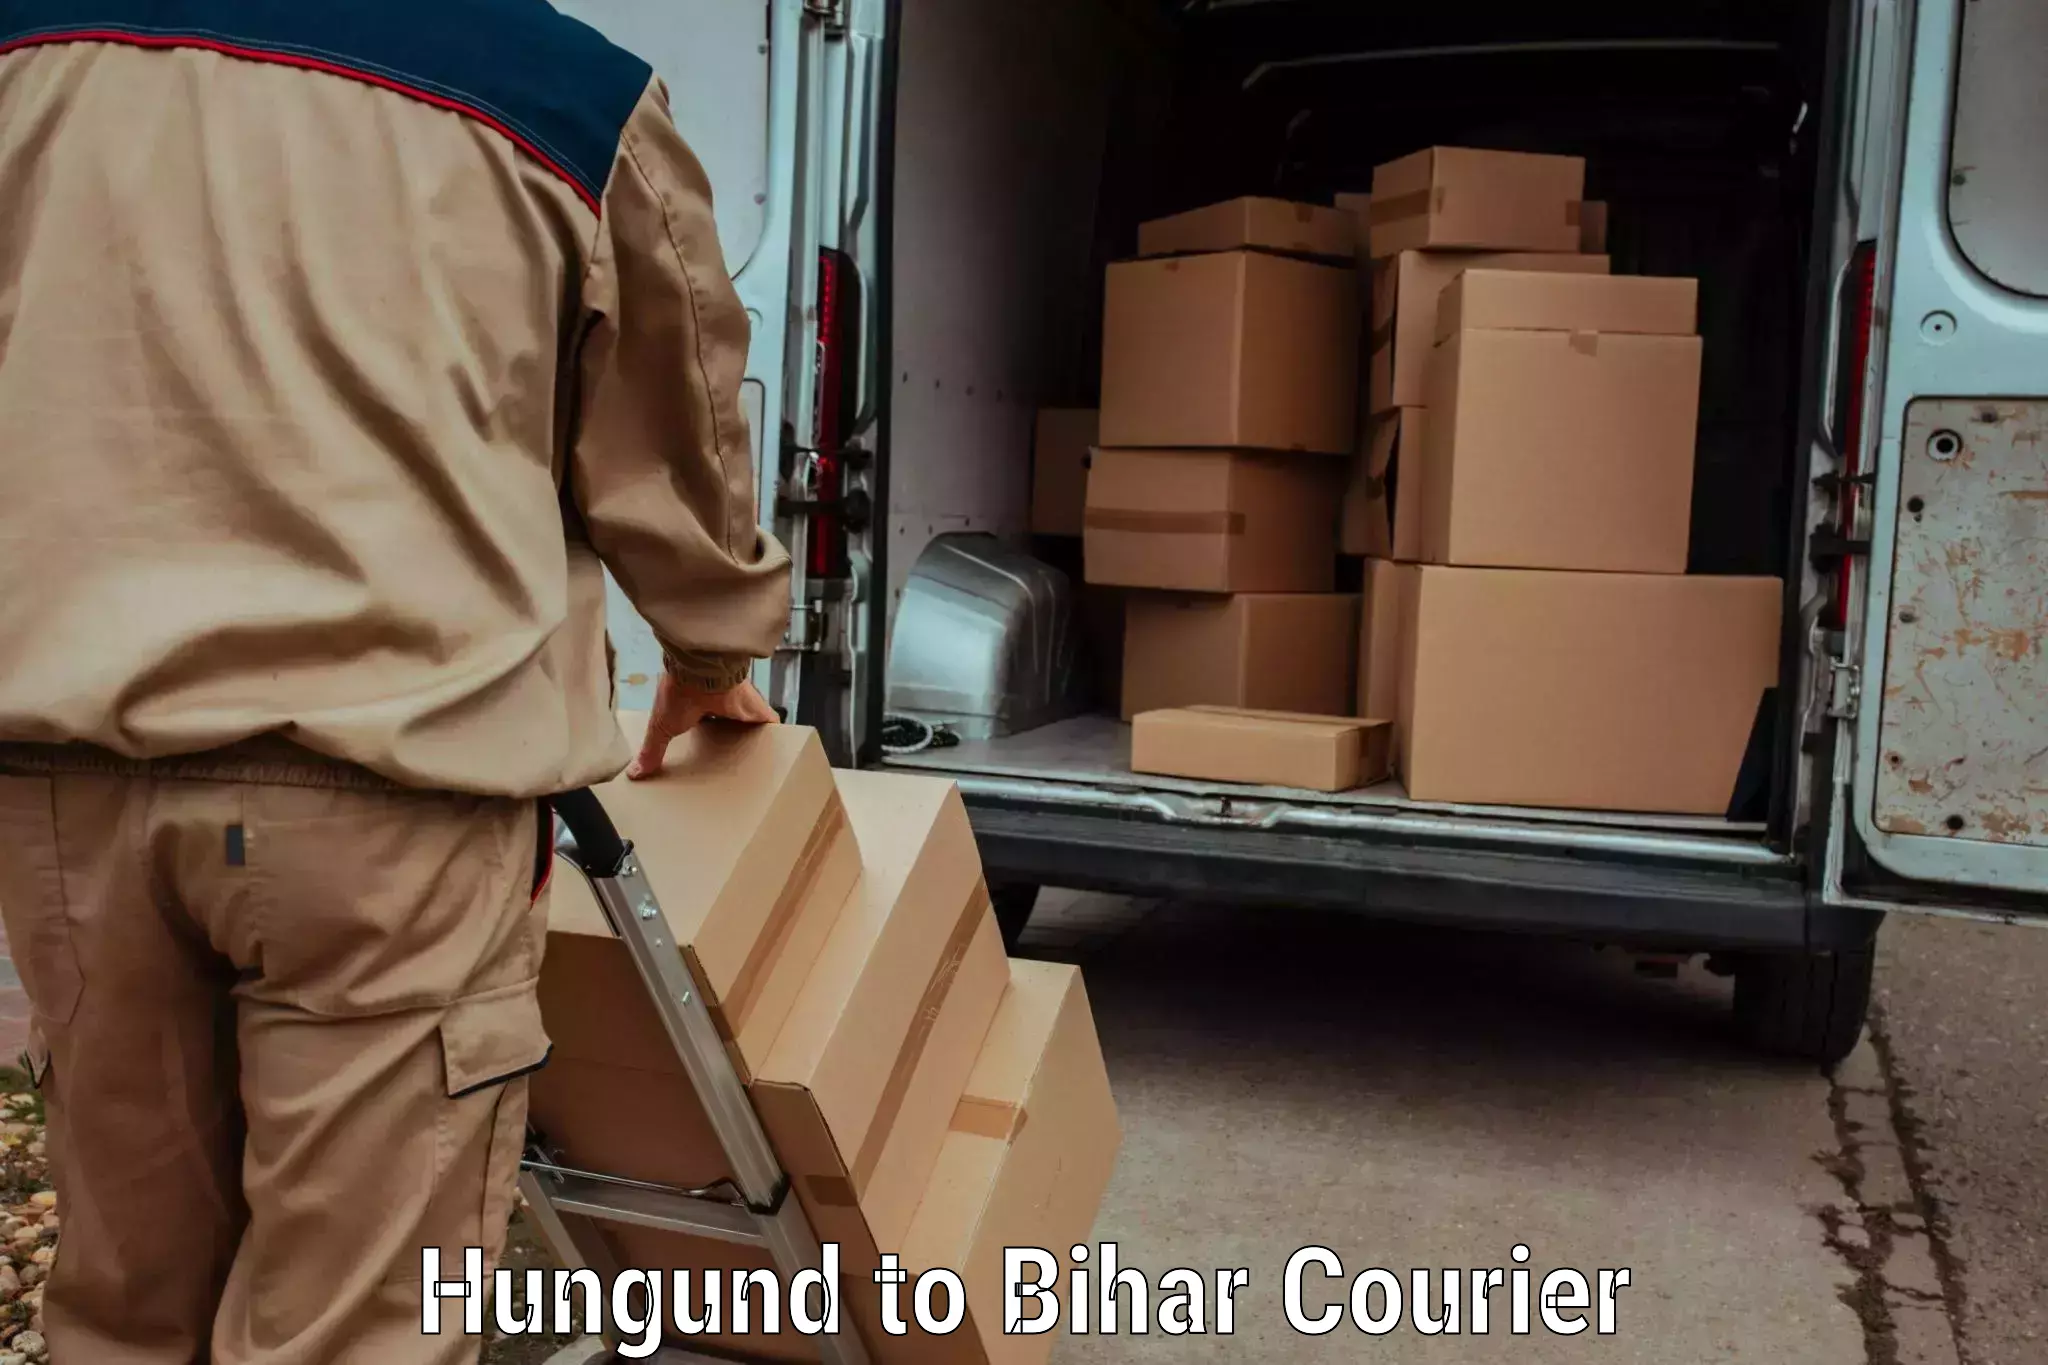 Same day luggage service Hungund to Bihar